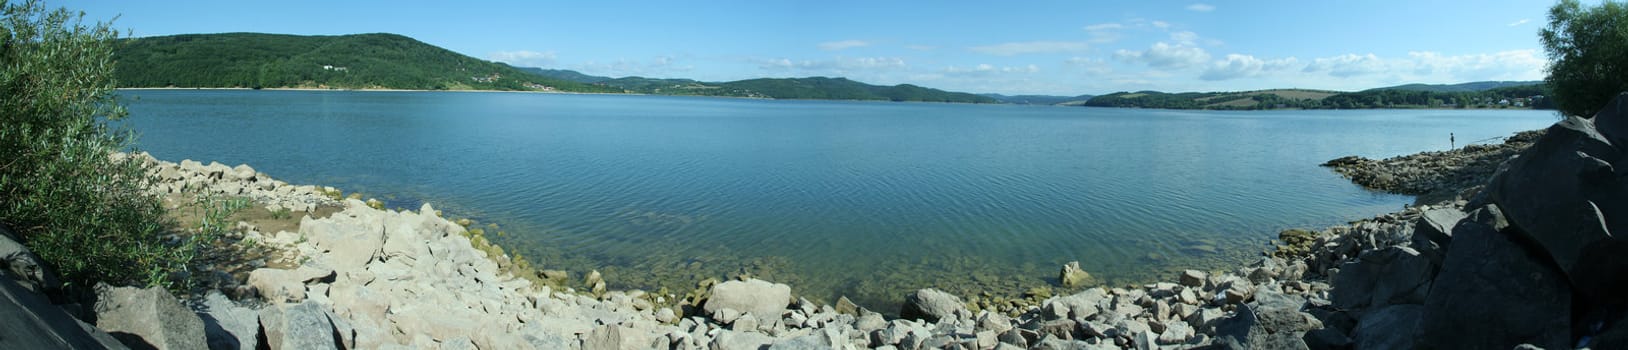 blue lake panorama, fisherman silhouette on right side, photo taken at Domasa, Slovakia